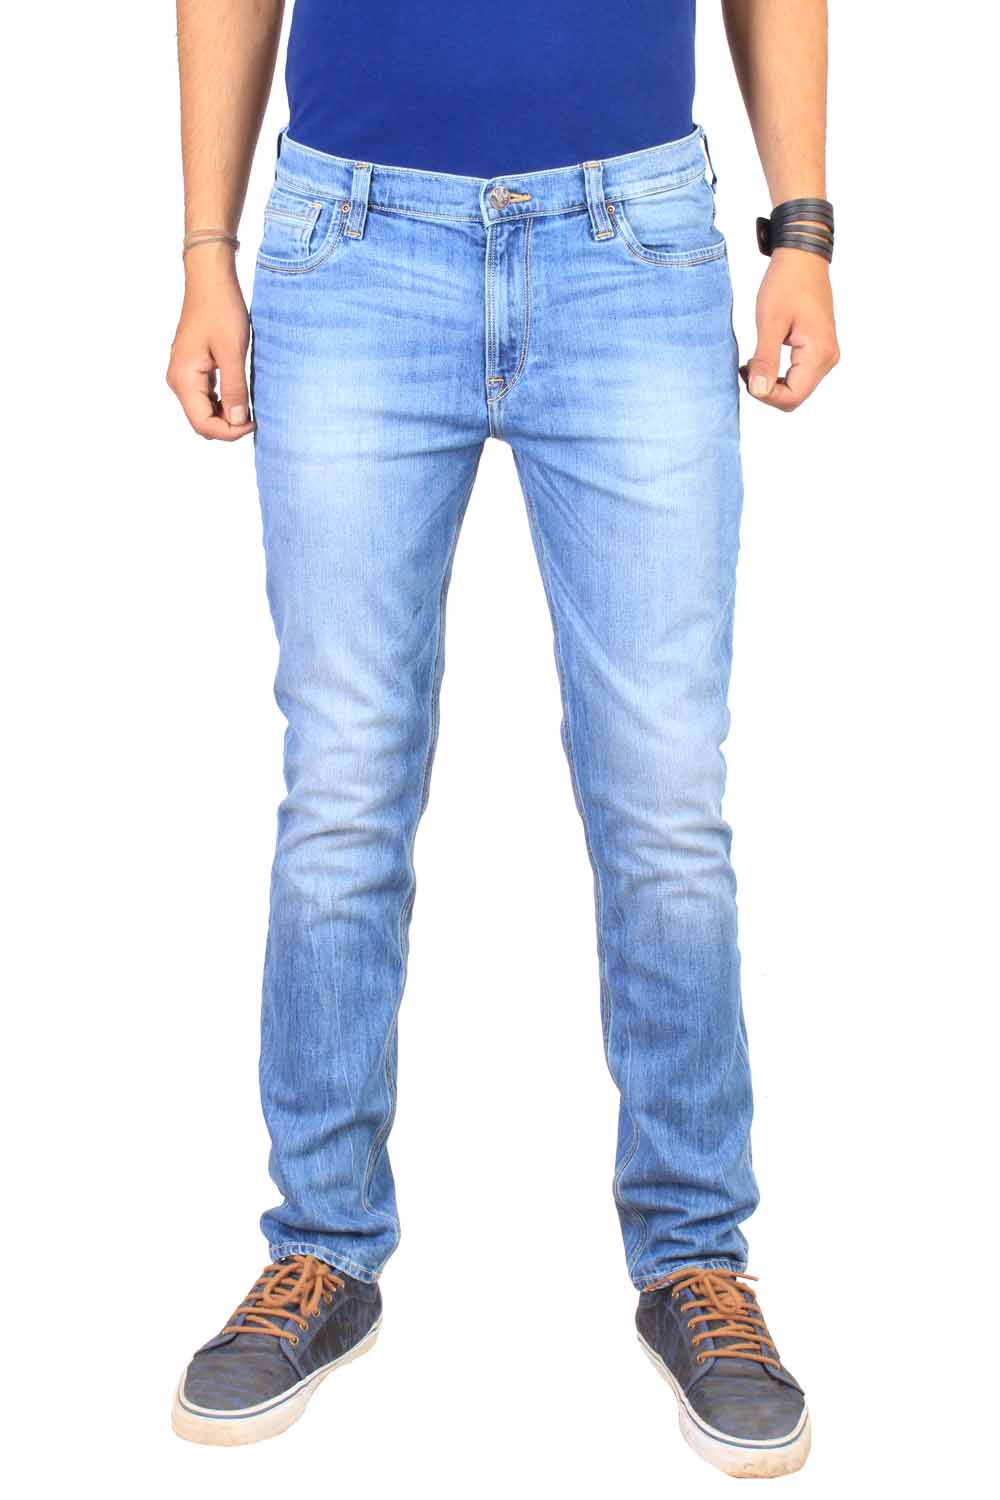 Buy Lee Men's Blue Skinny Fit Jeans Online @ ₹1859 from ShopClues